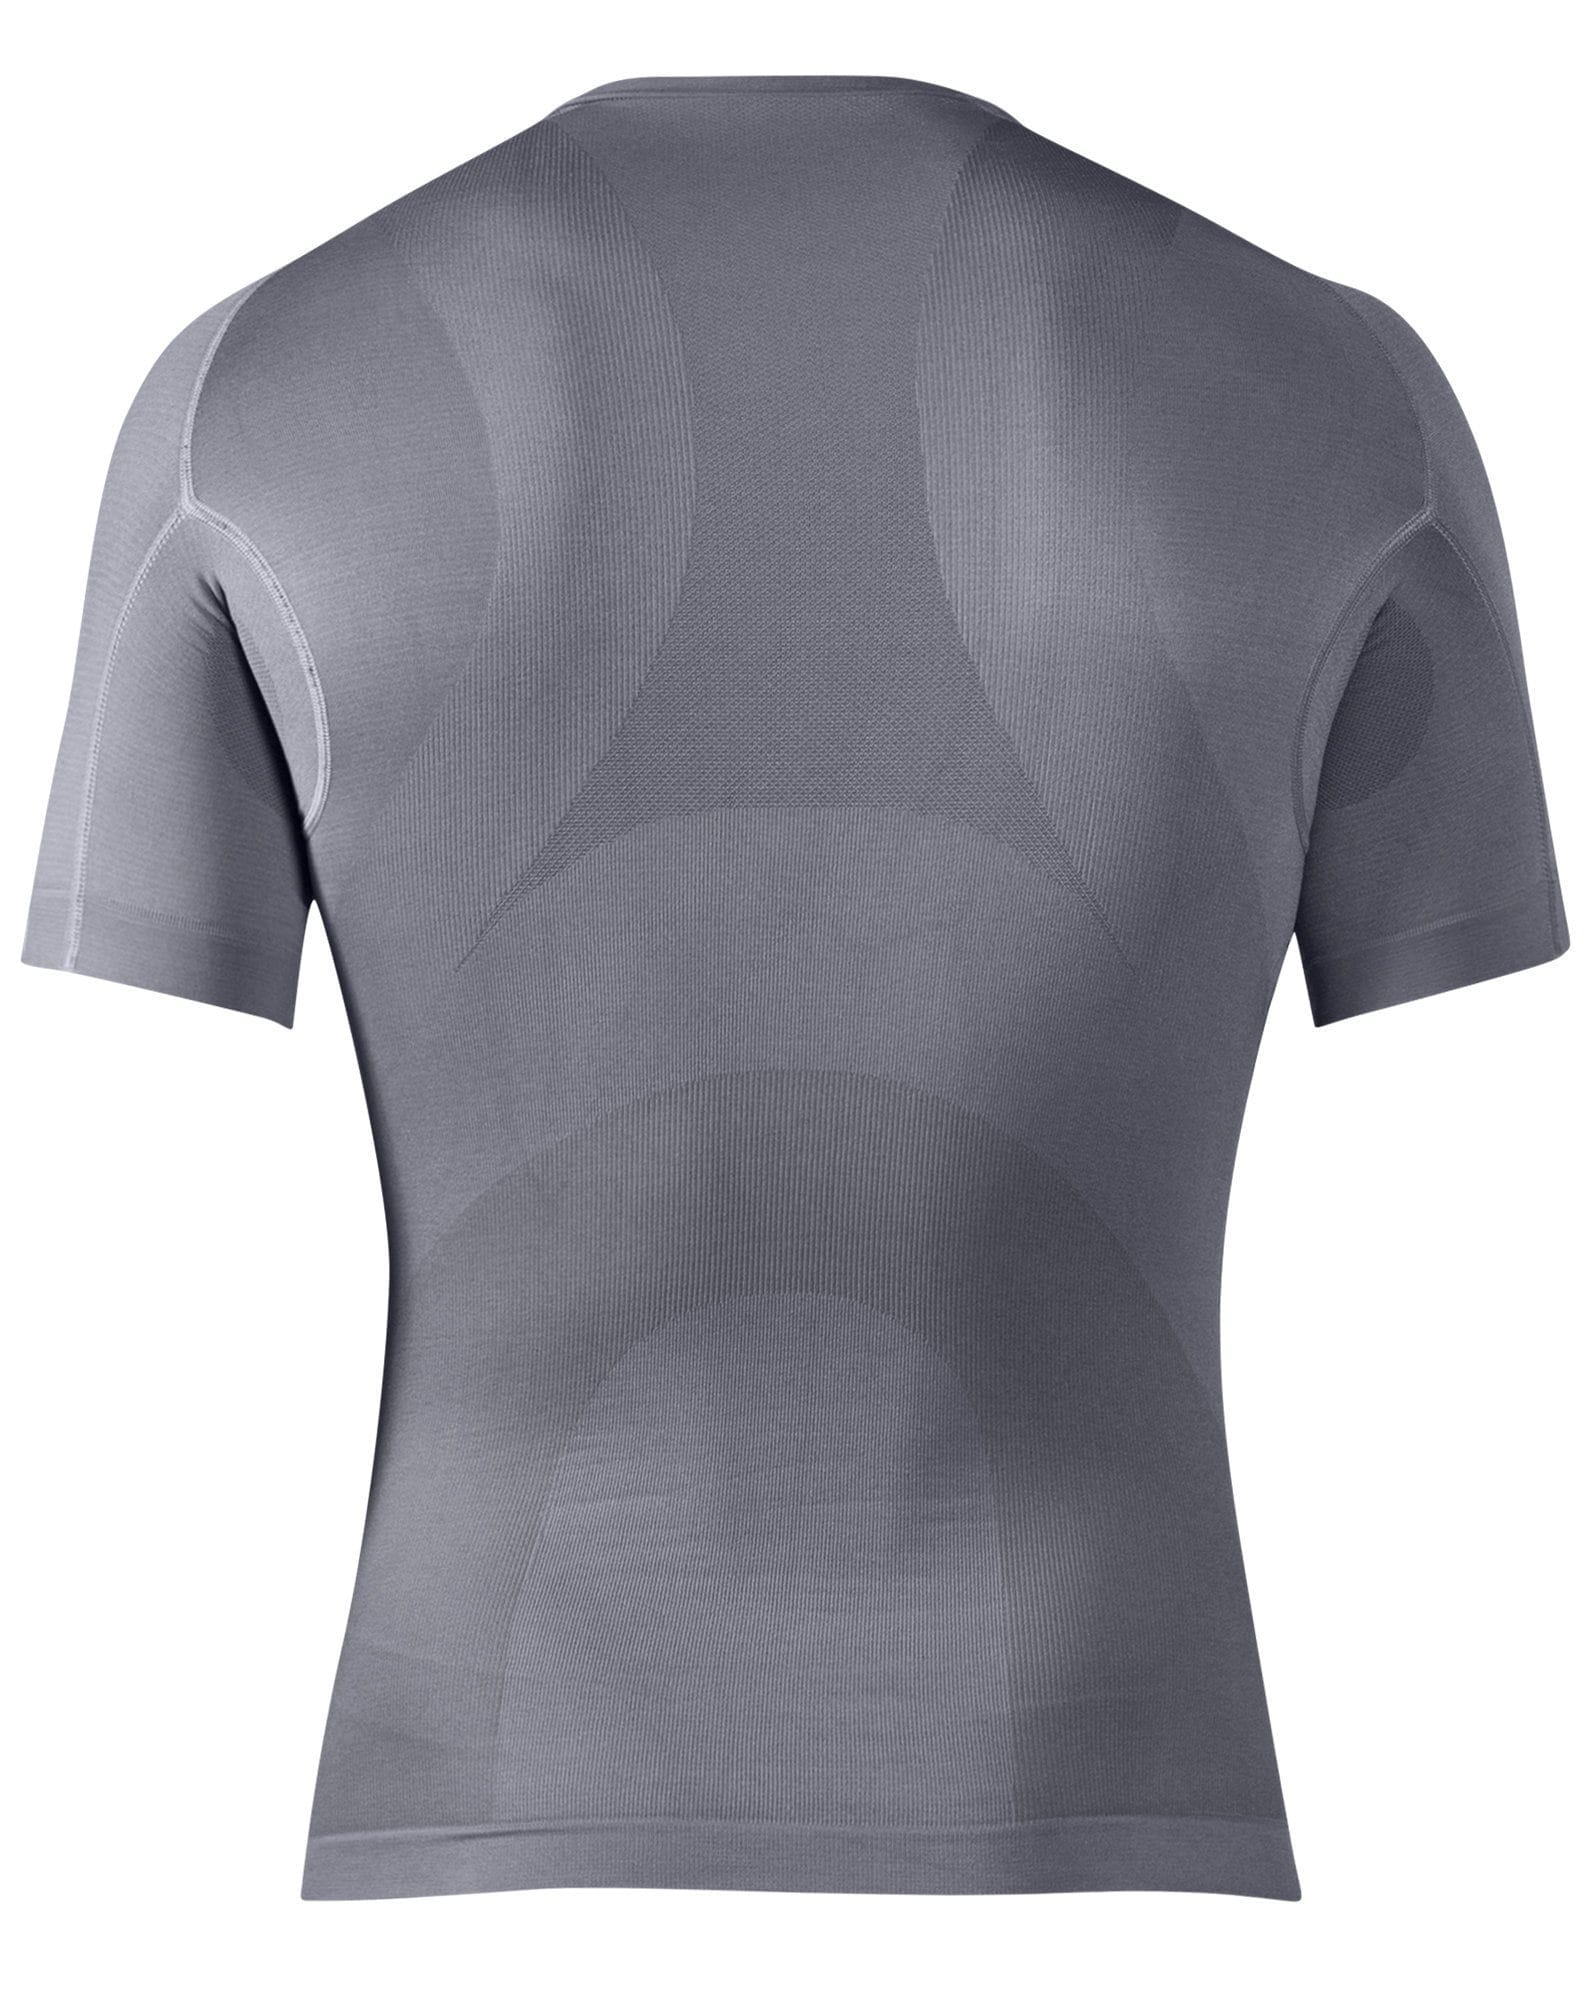 Knapman Men's Compression Shirt V-Neck grey - V-Neck - Knapman